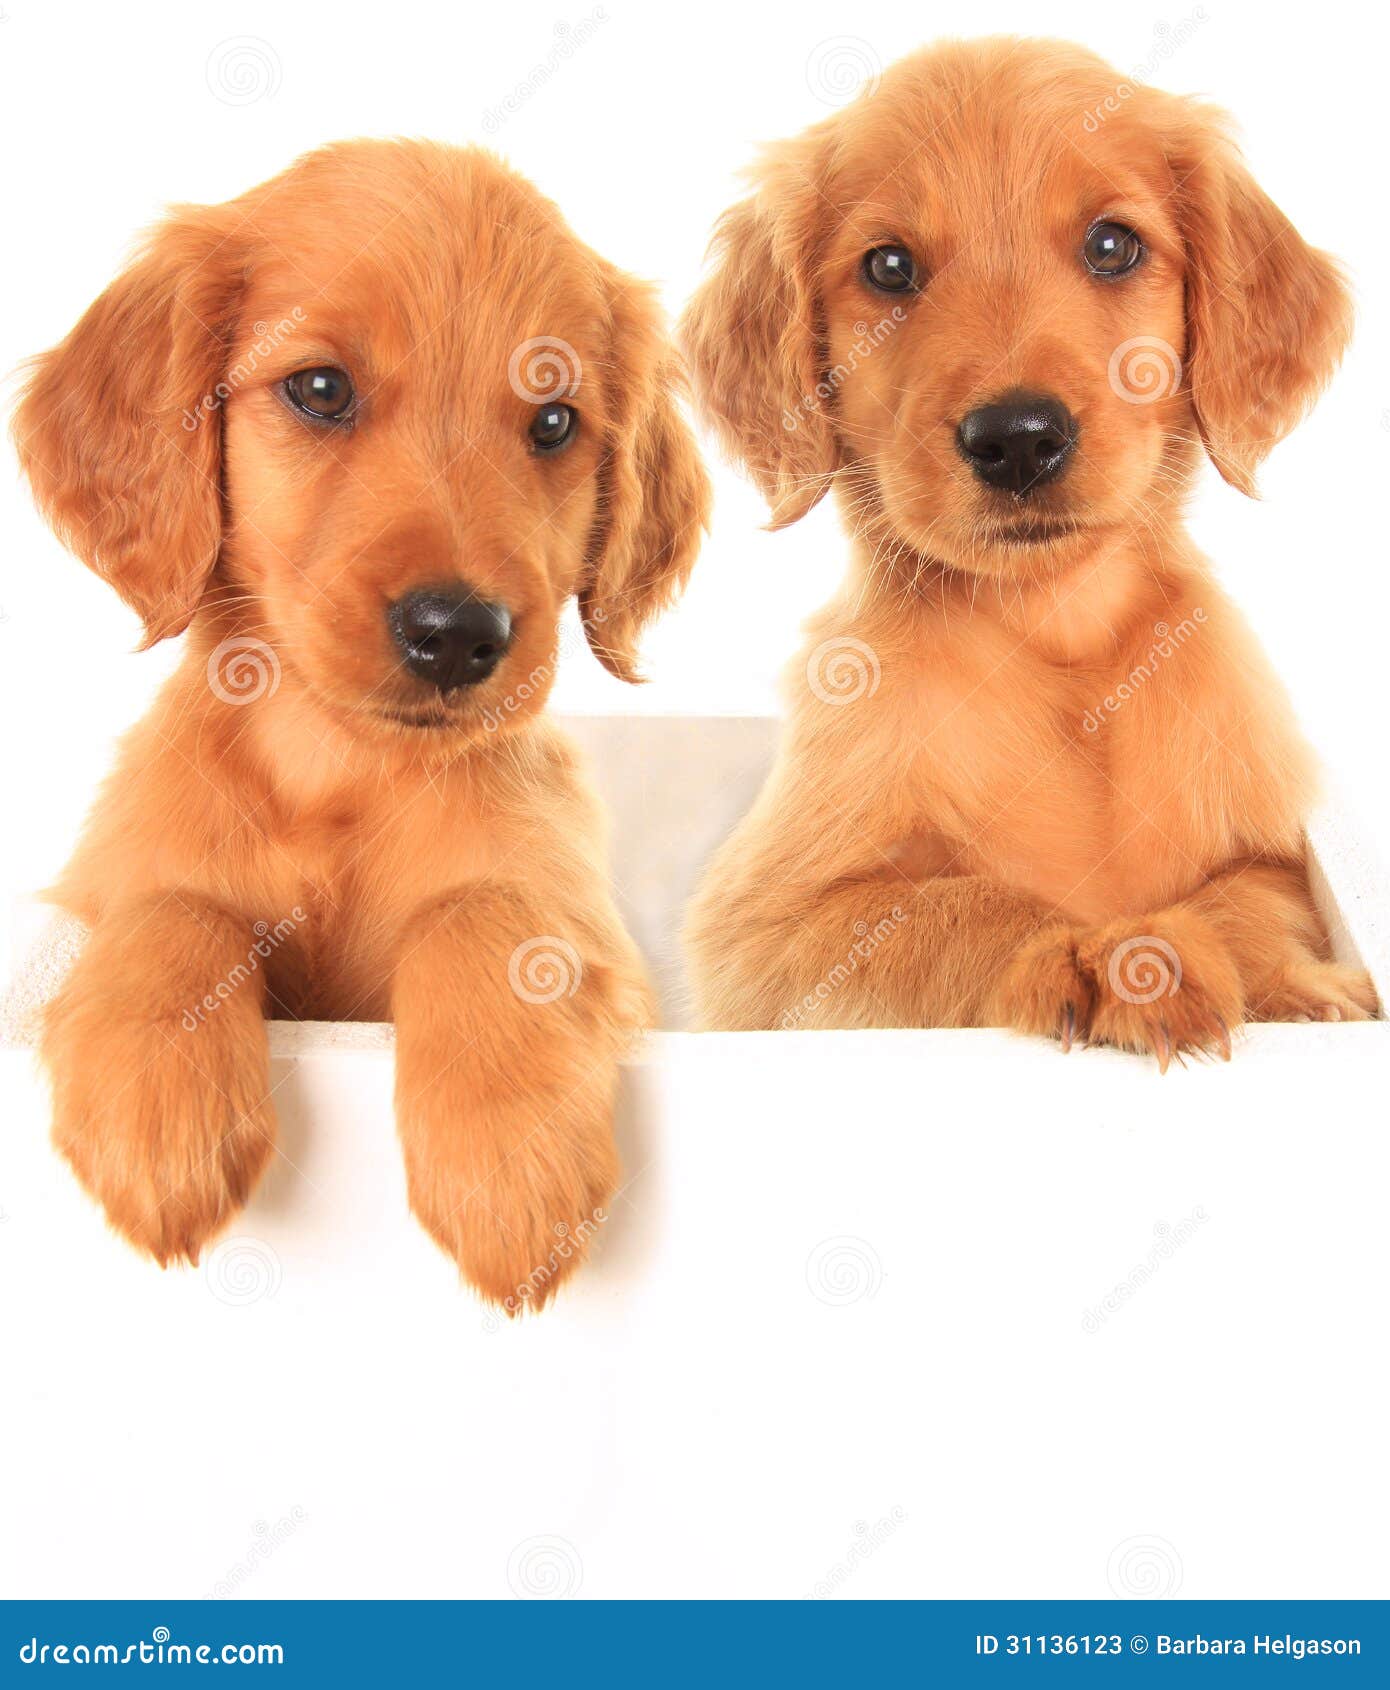 golden irish puppies for sale ireland